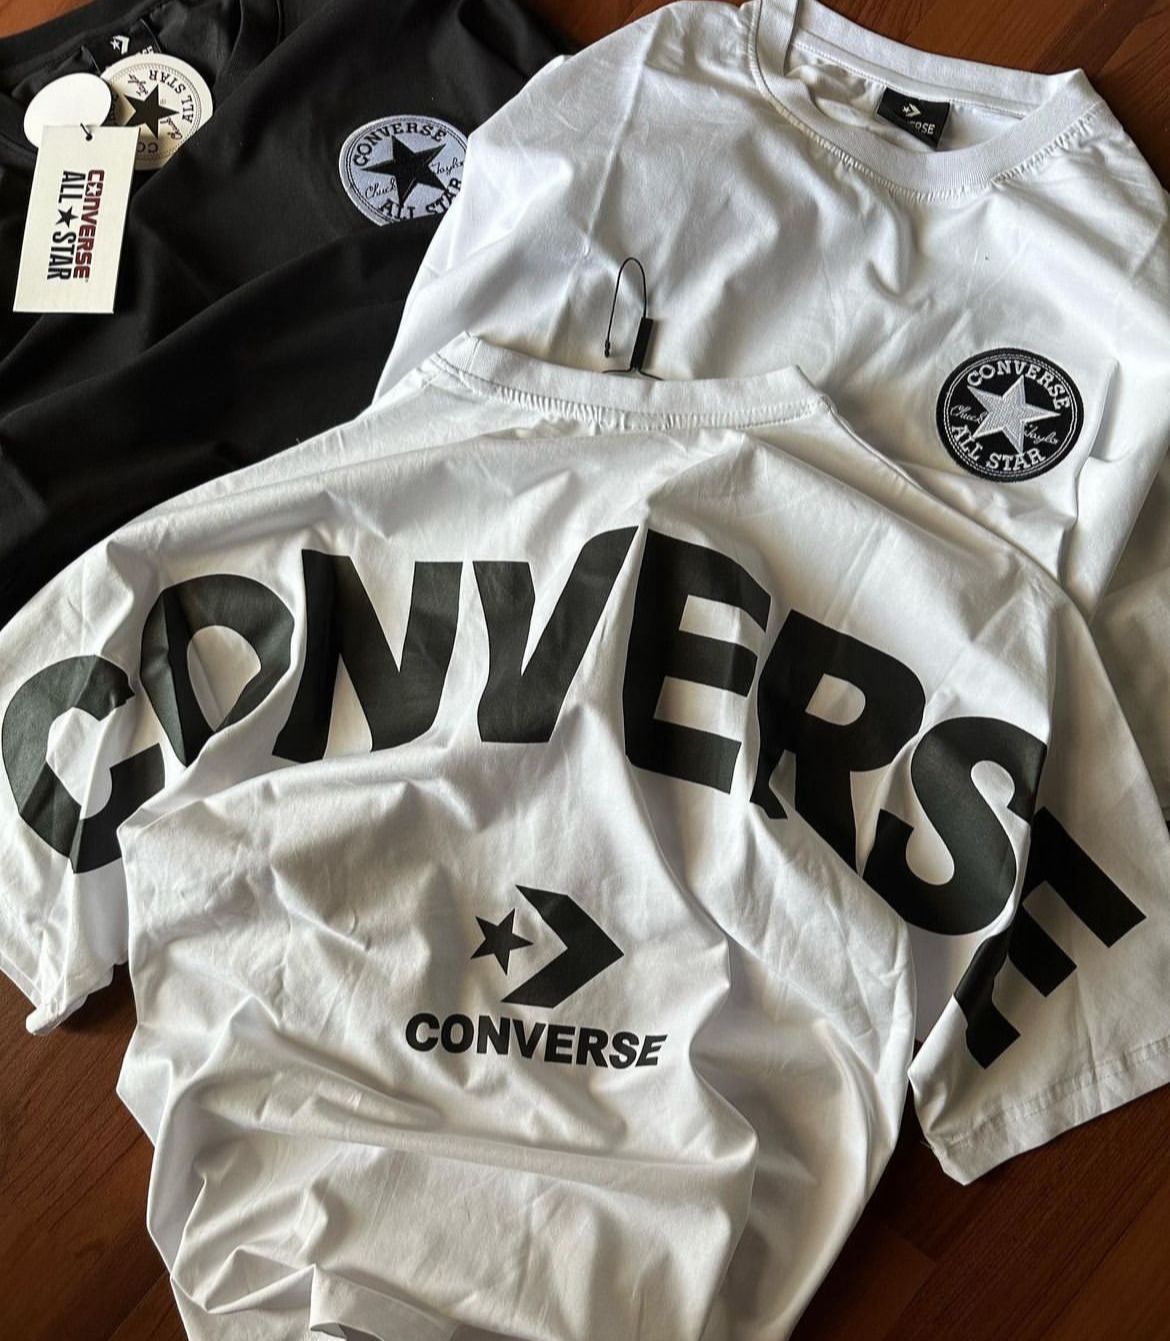 Converse drop shoulder t shirt-White and Black on sale